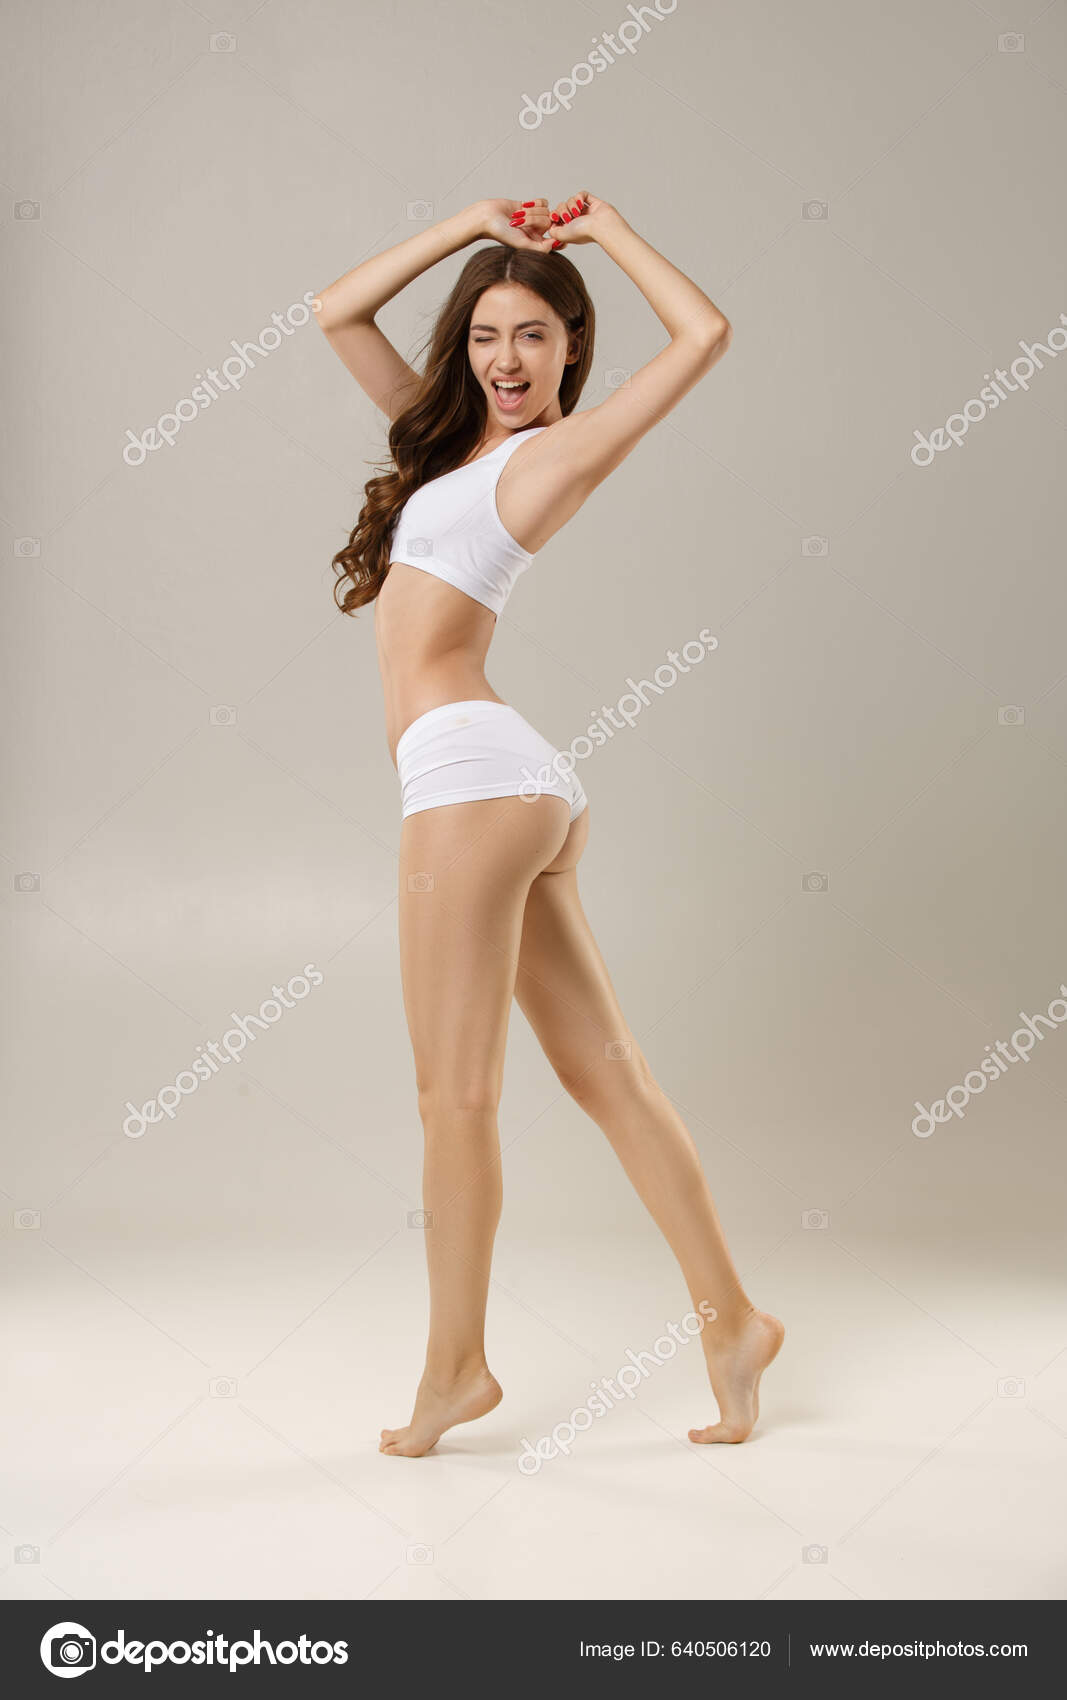 Feeling Beautiful Woman Natural Slim Tanned Body Underwear Plays Hair  fotos, imagens de © panin.sergey.me.com #640506120